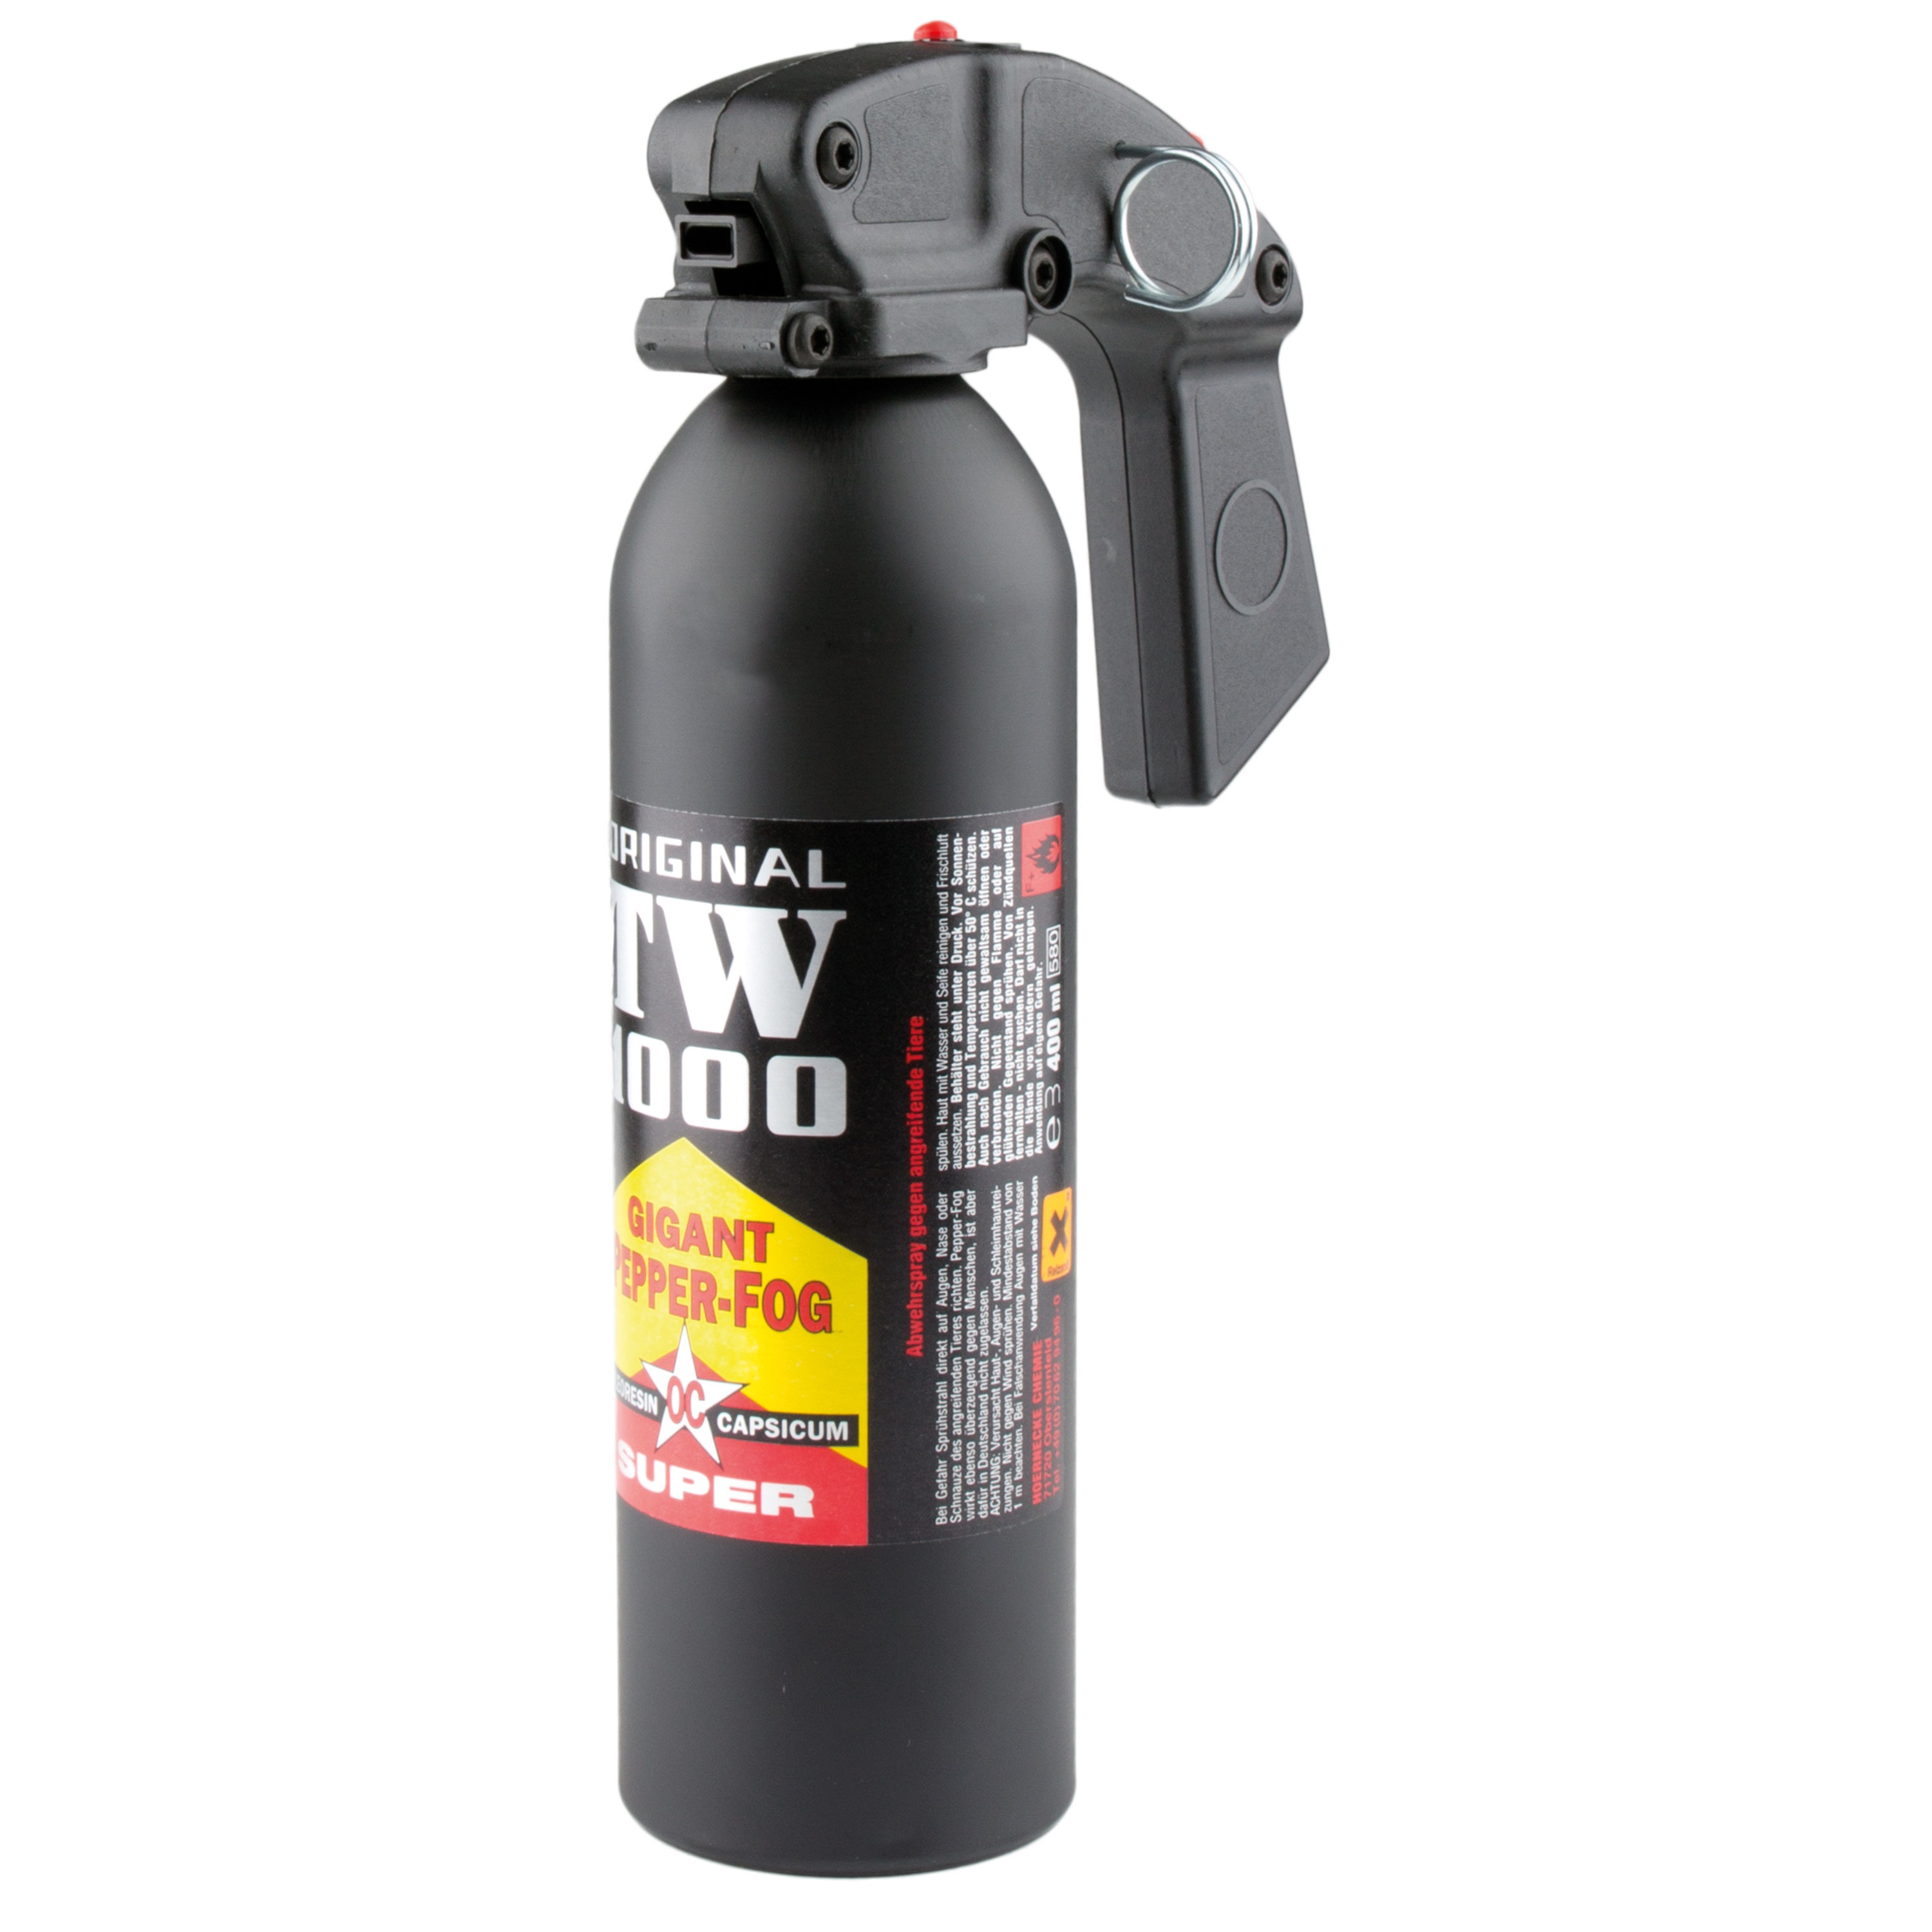 Abwehrspray TW1000 Pfefferspray Super Giant Professional, 400 ml kaufen